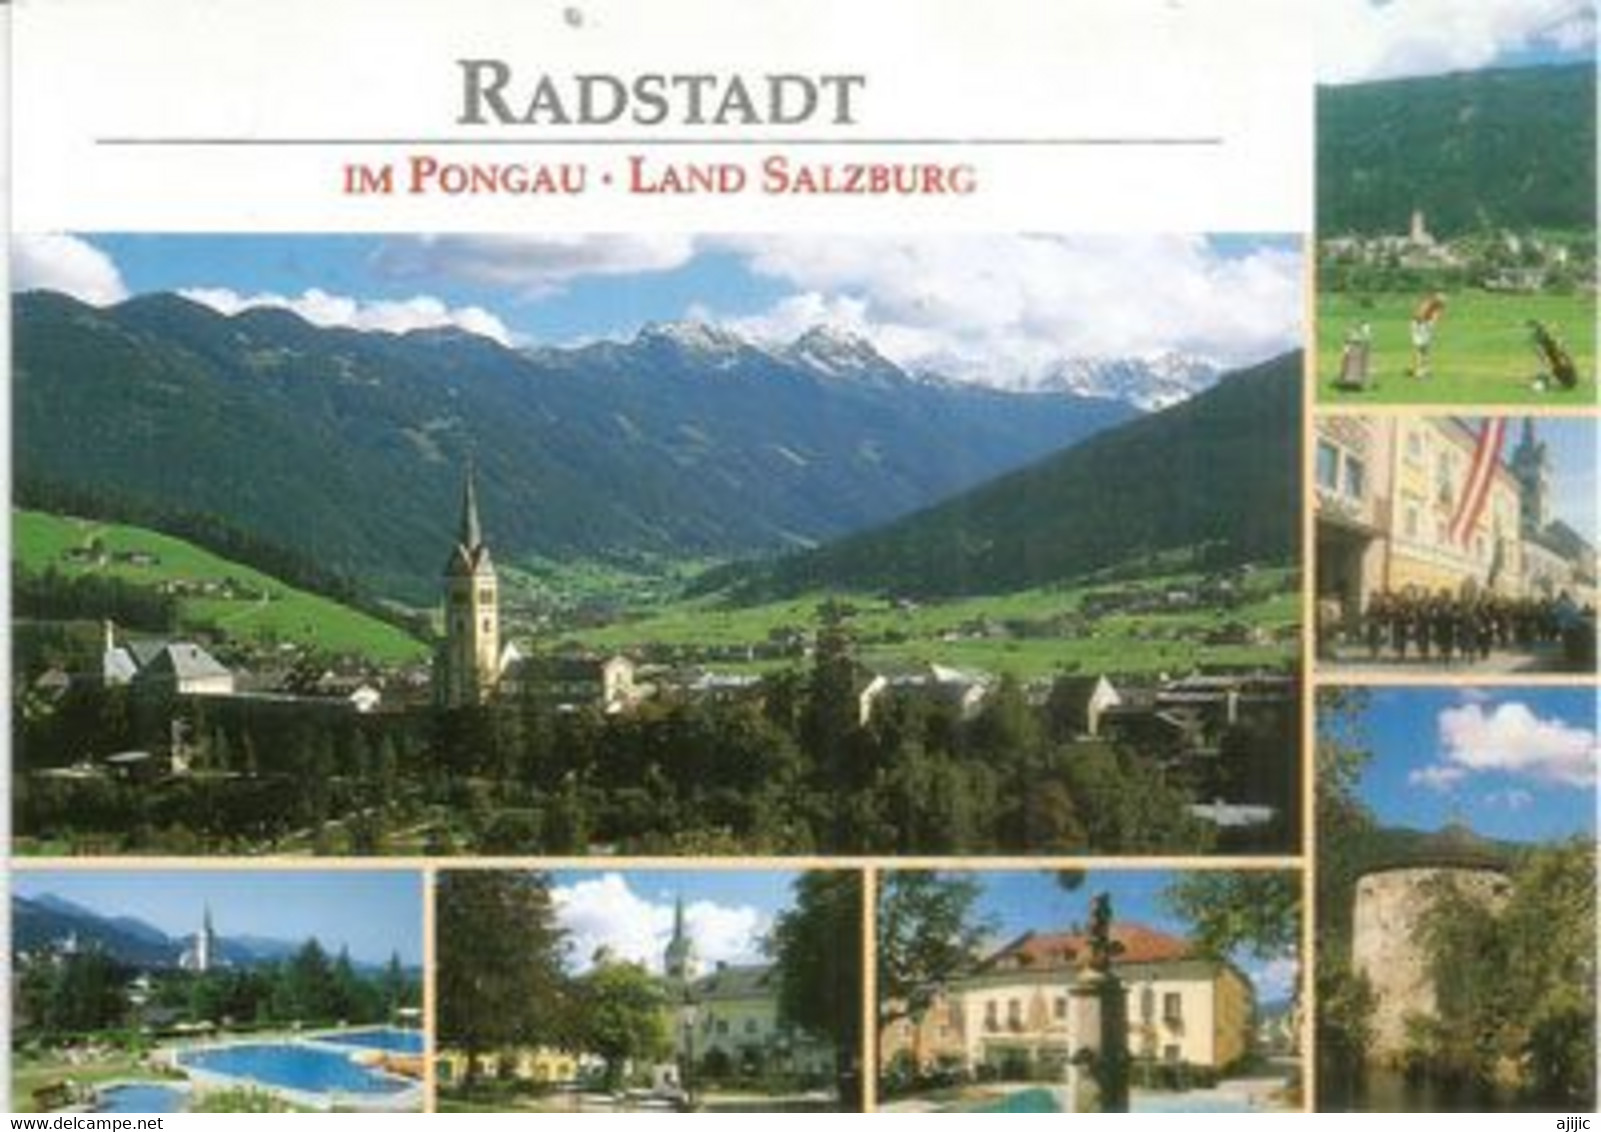 Radstadt In Summer. New Postcard,new Condition, Uncirculated - Radstadt